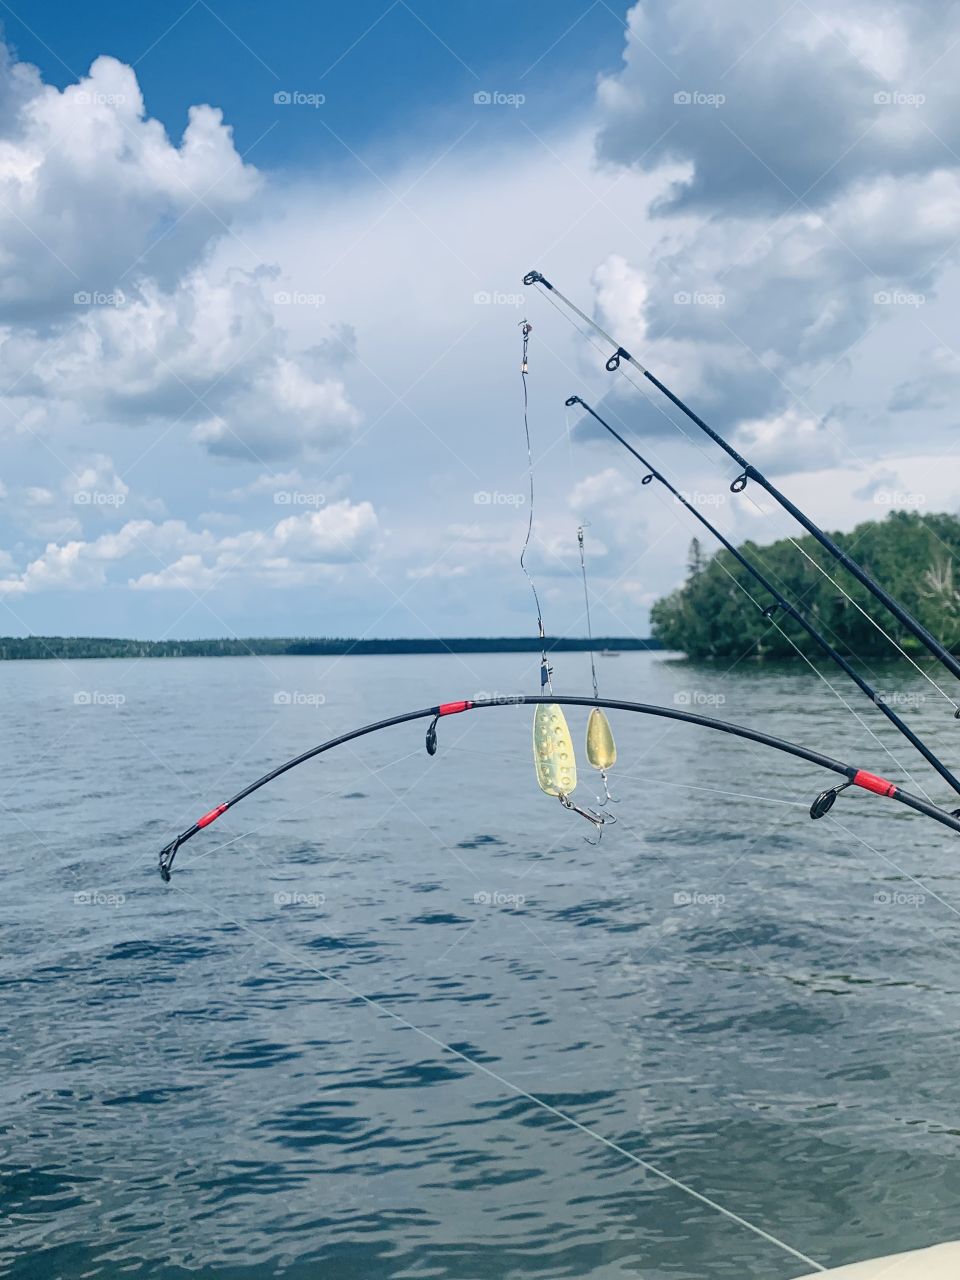 Fishing on the lake 